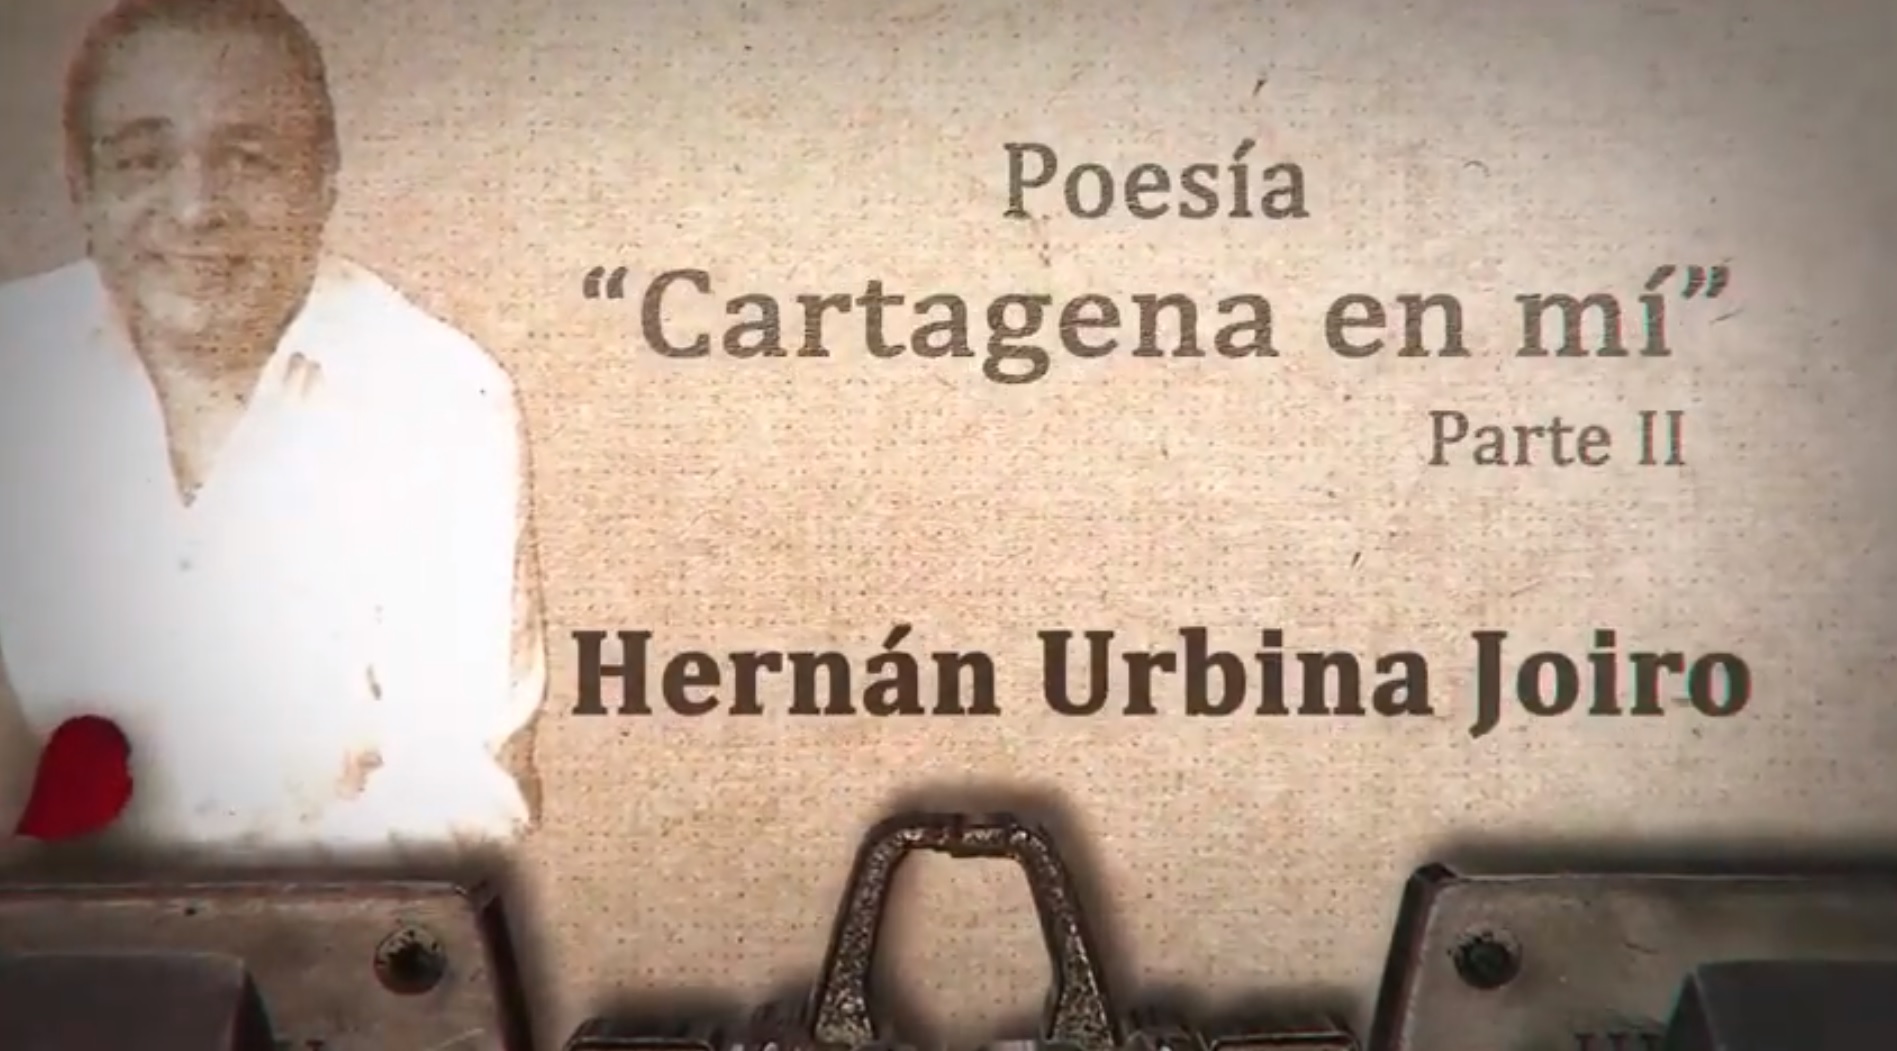 Hernán Urbina Joiro poeta en Cartagena